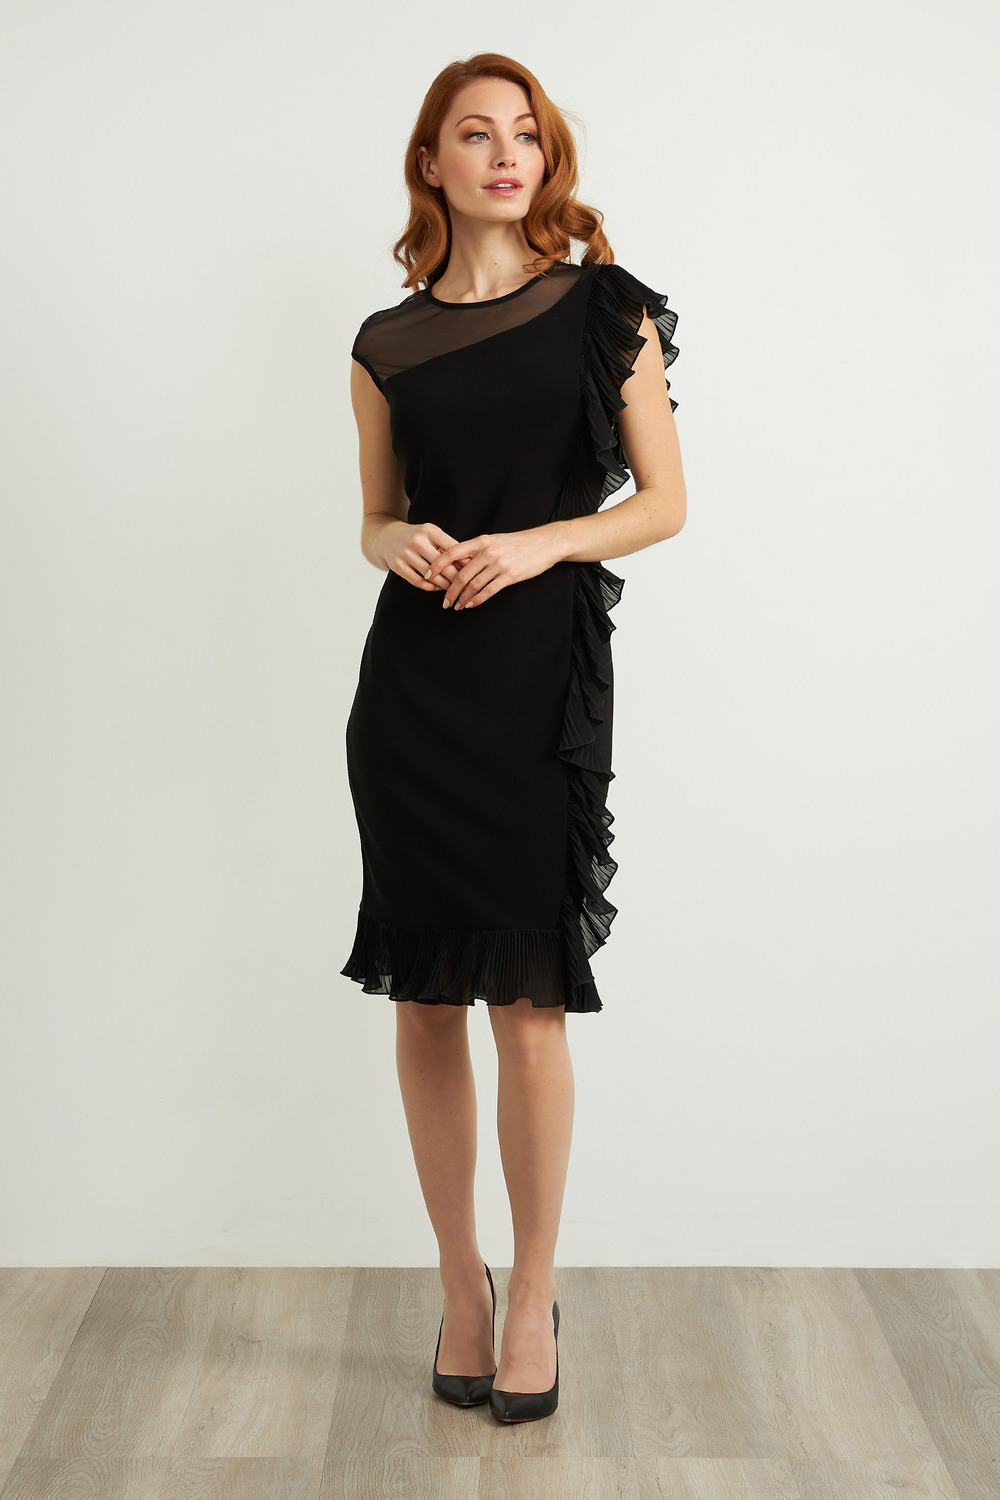 Joseph Ribkoff Frilled Dress Style 211476. Black